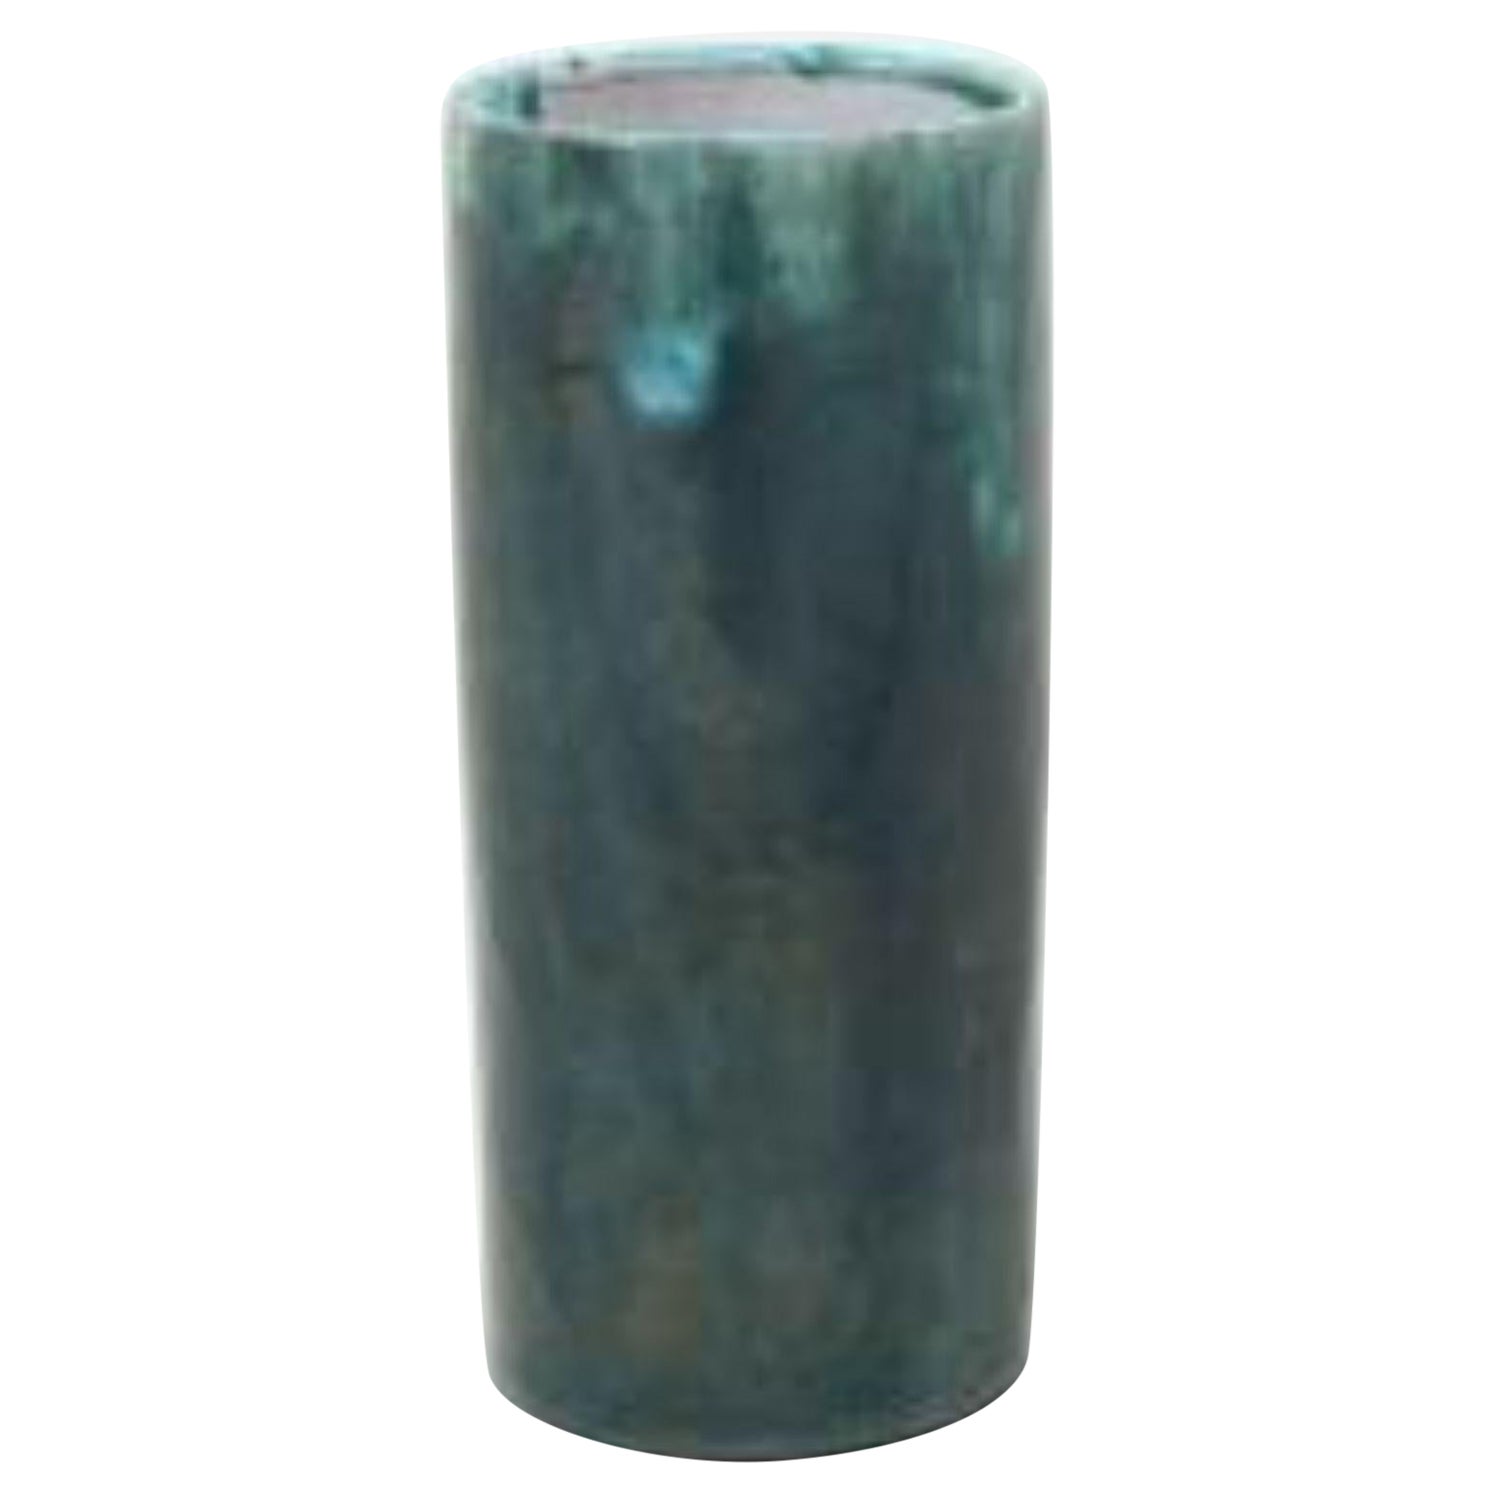 Cylindrical Green Glazed Ceramic Studio Vase, Biot, France, c. 1950